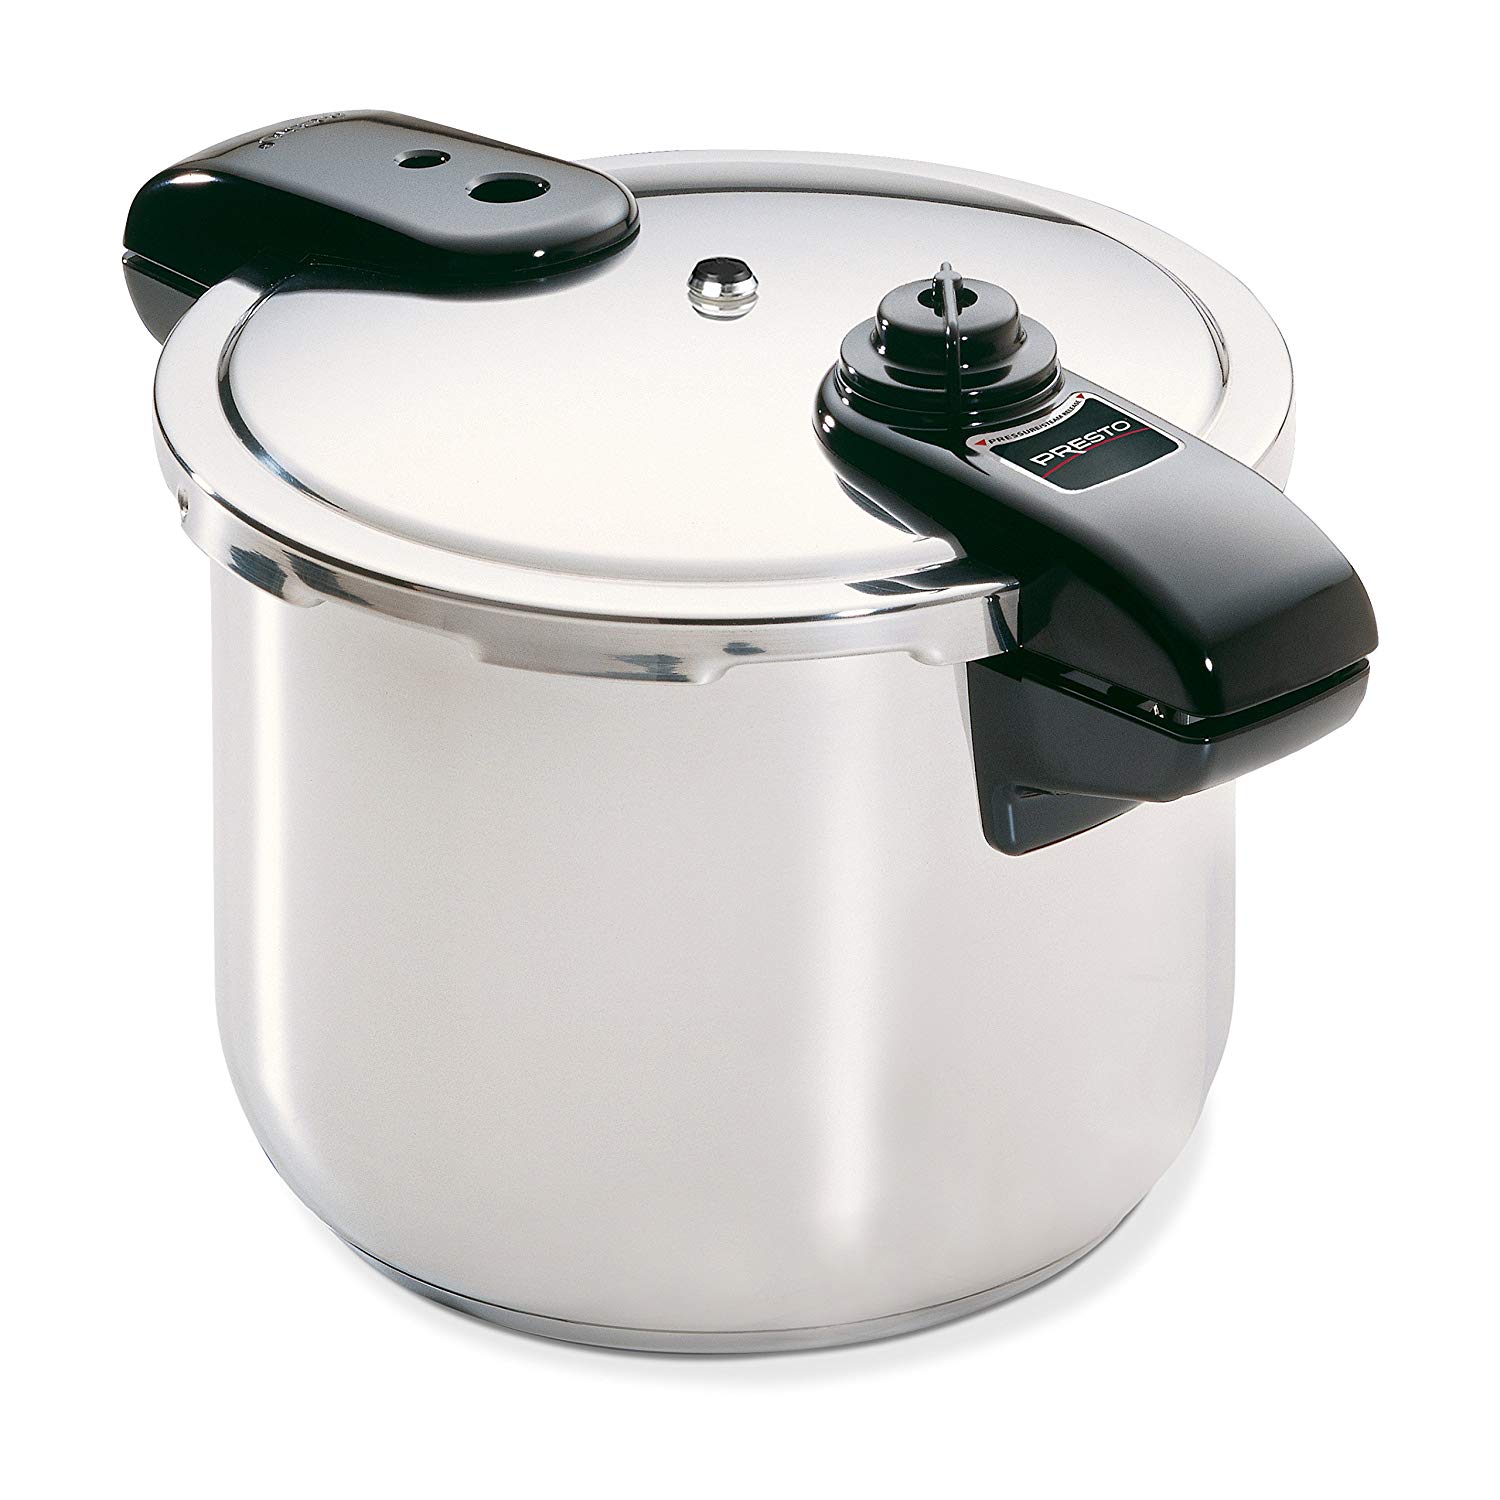 https://www.dontwasteyourmoney.com/wp-content/uploads/2019/11/presto-8-qt-pressure-cooker-model-1370-pressure-cooker.jpg